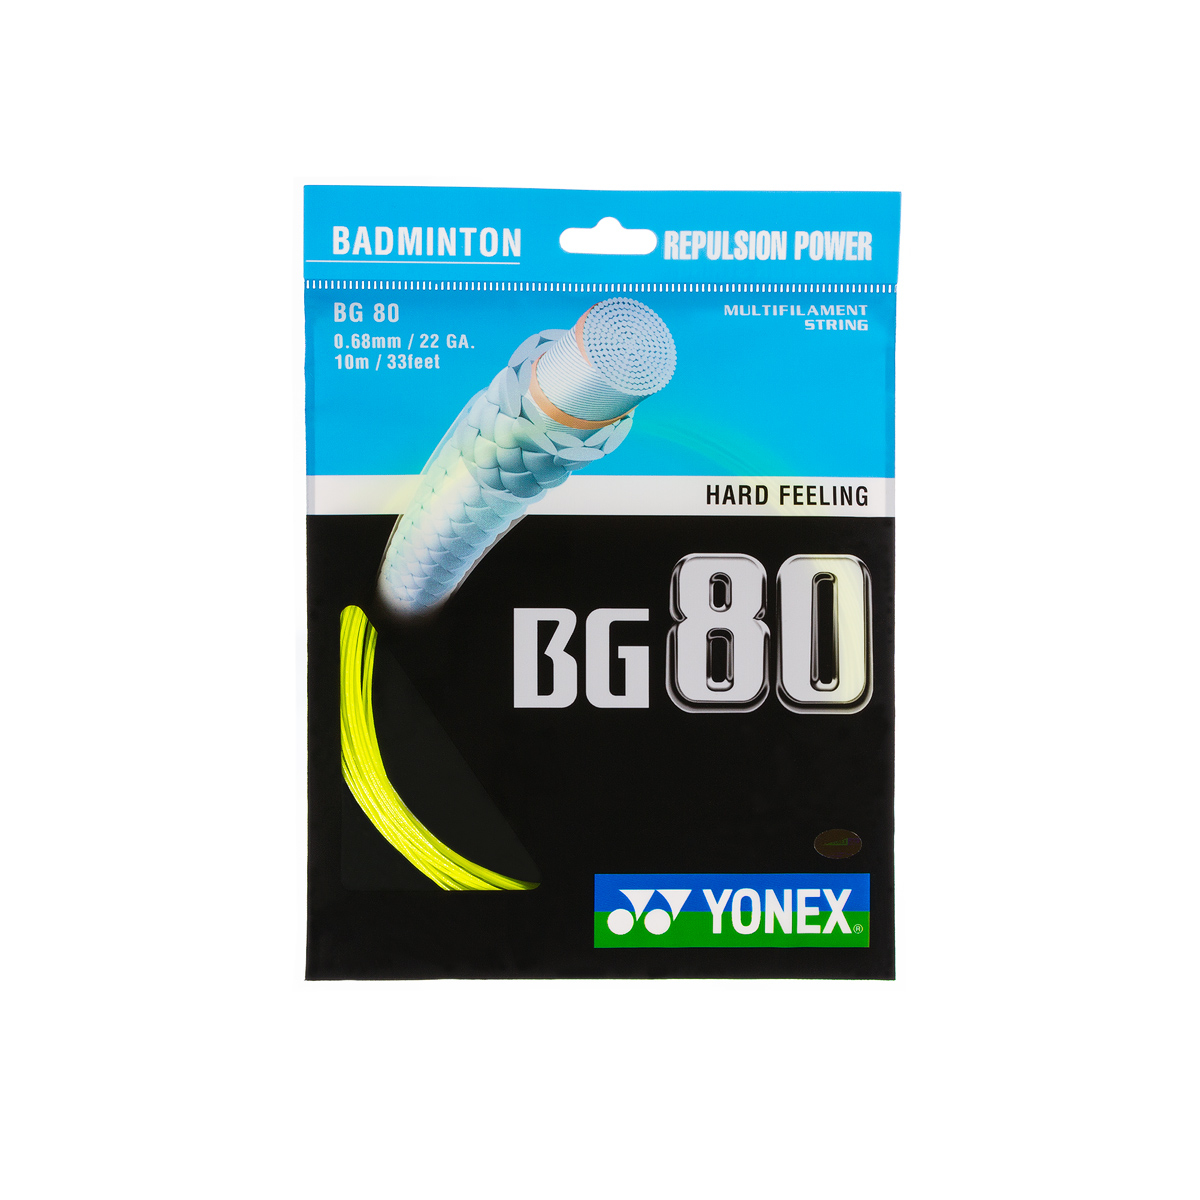 YONEX Badminton Saite - BG-80 SETDetailbild2